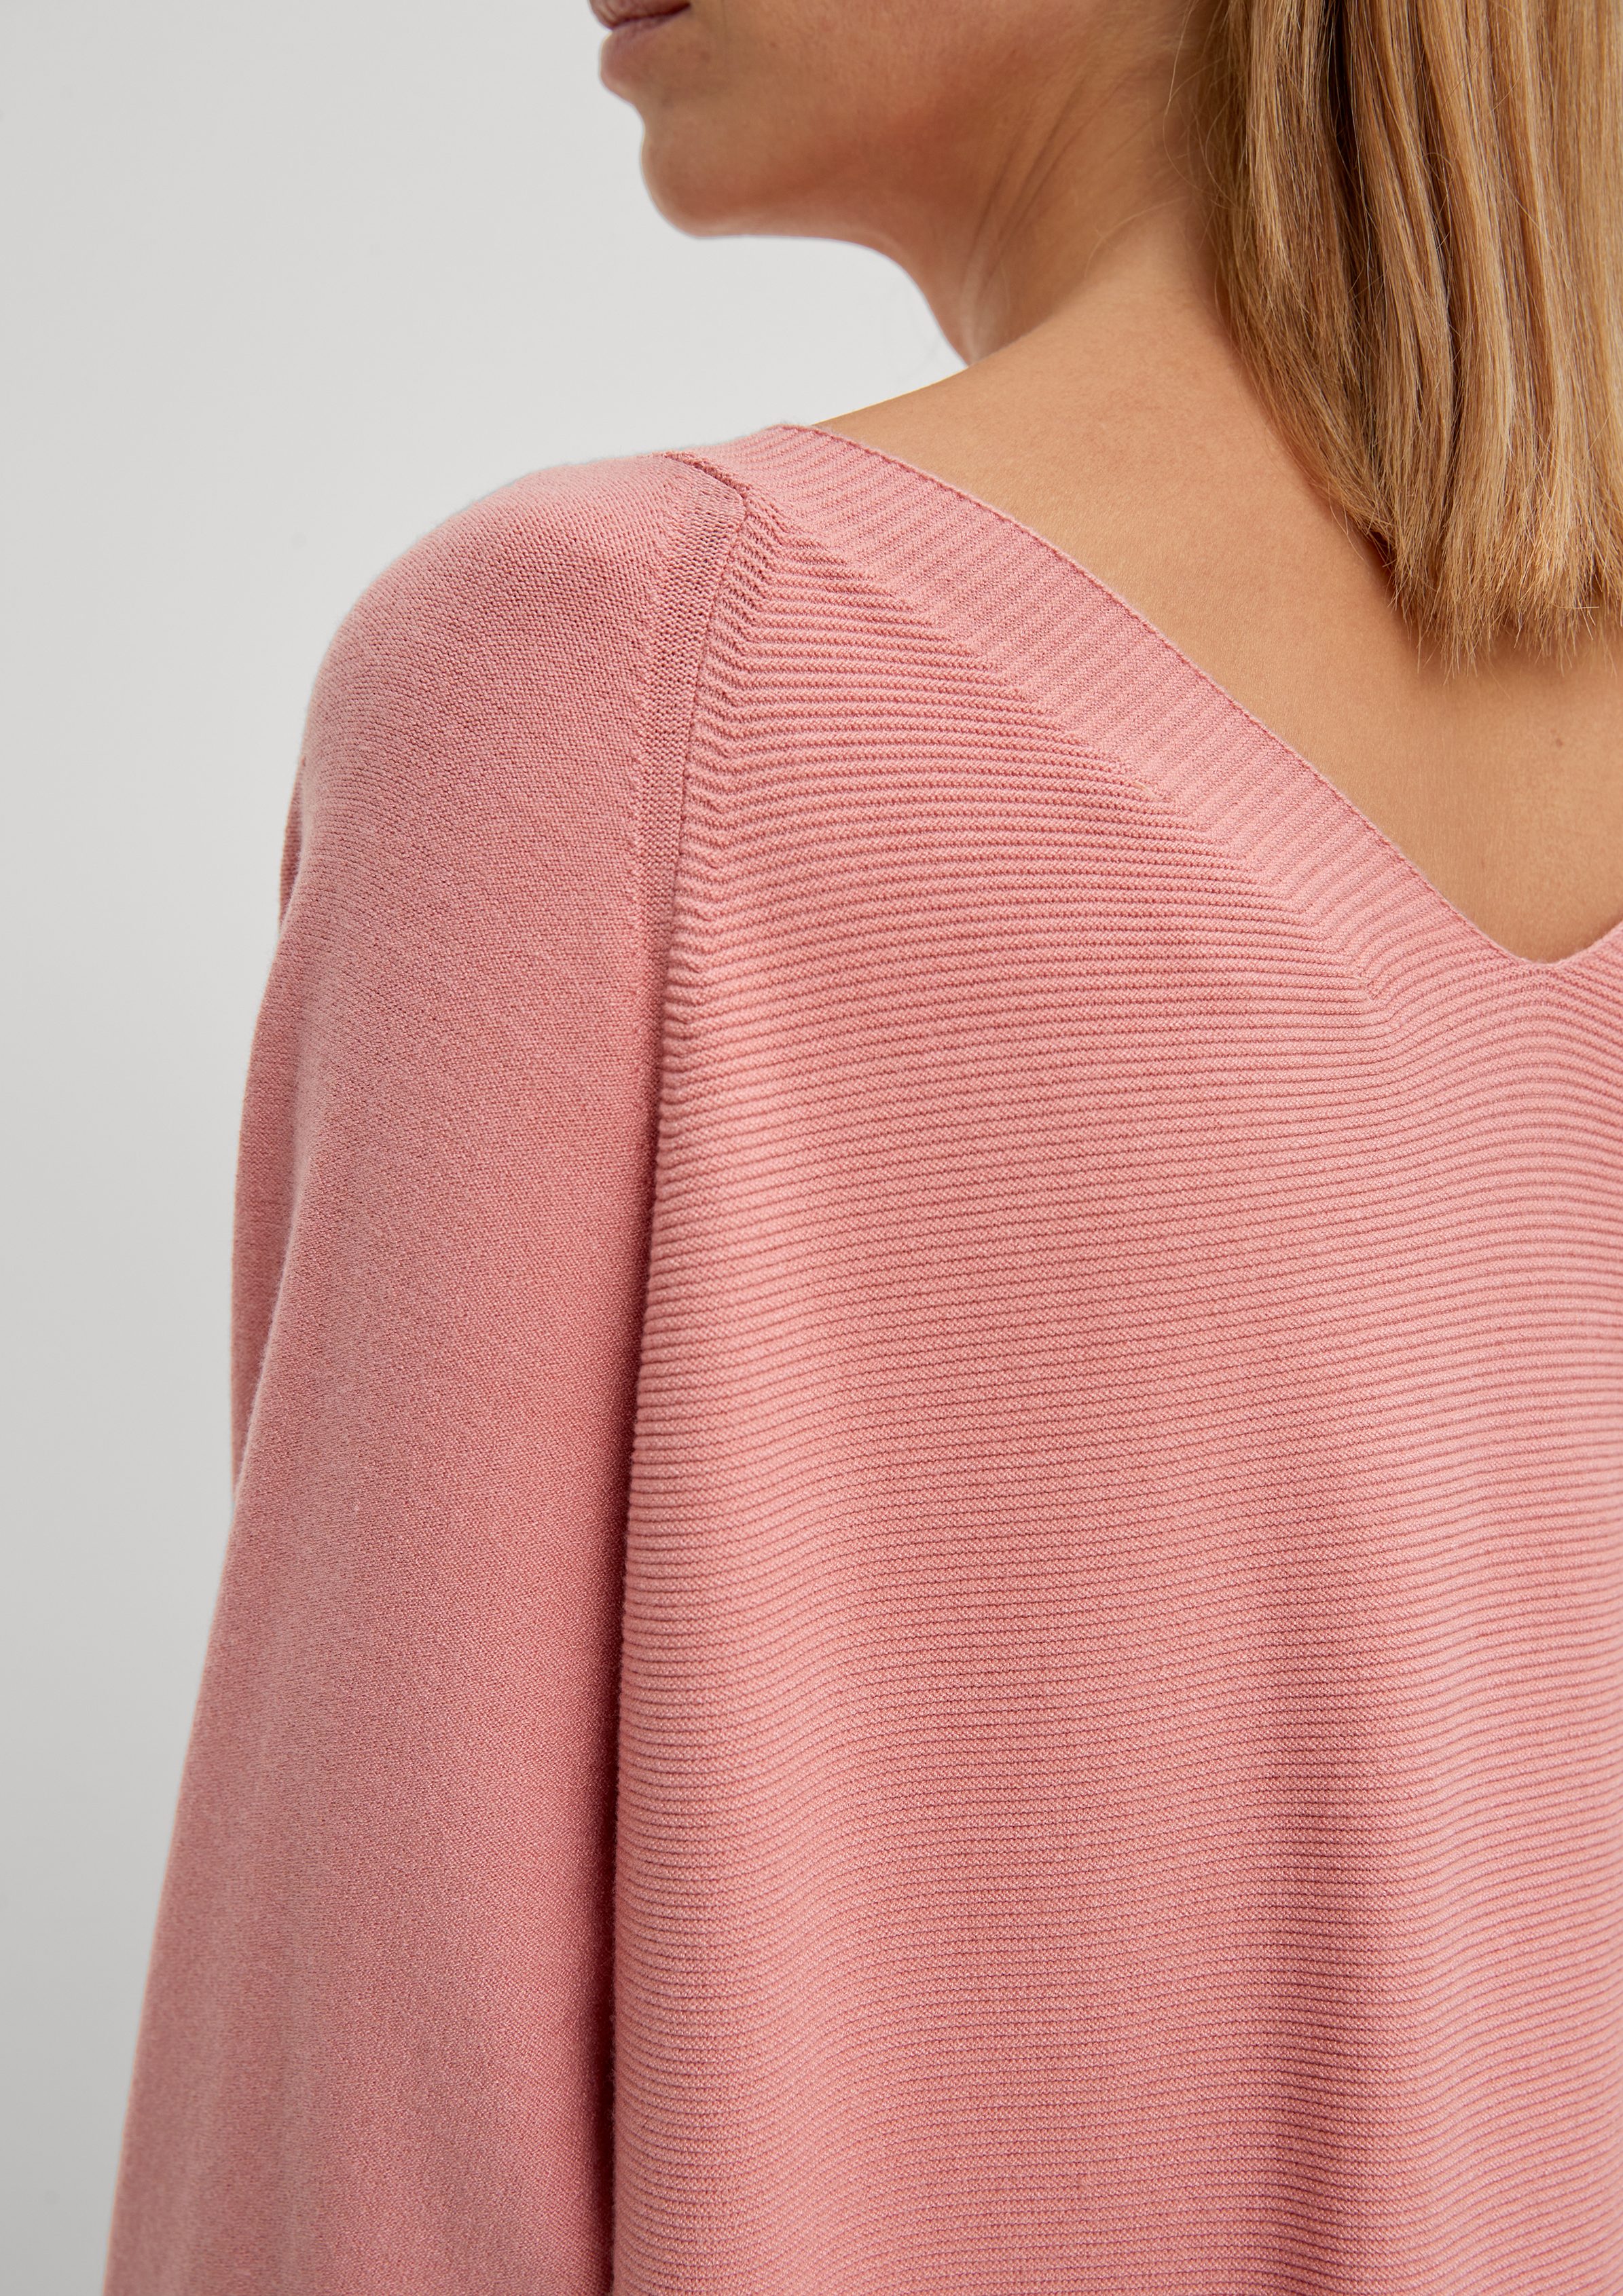 Comma Langarmshirt Pullover aus rosa Viskosestretch